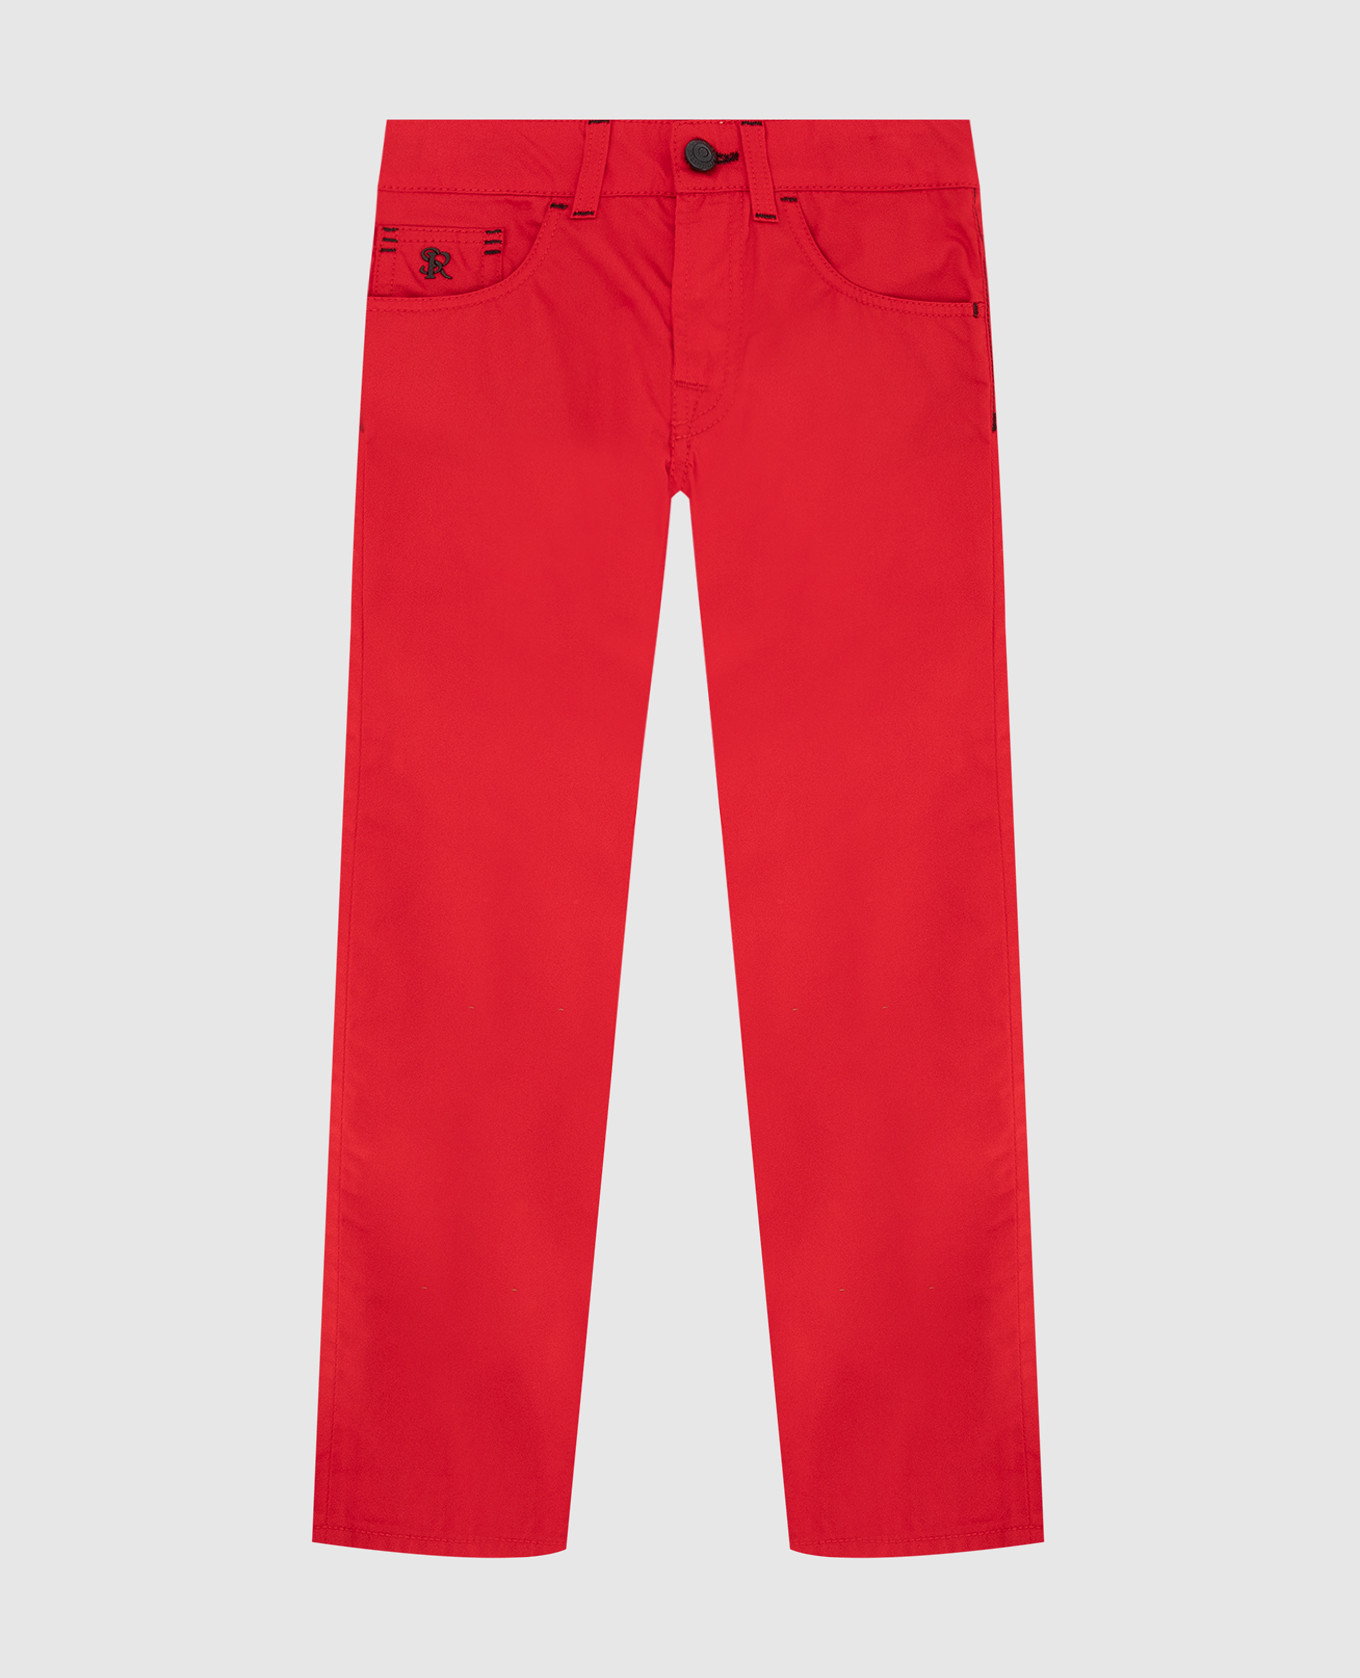 Children's red jeans